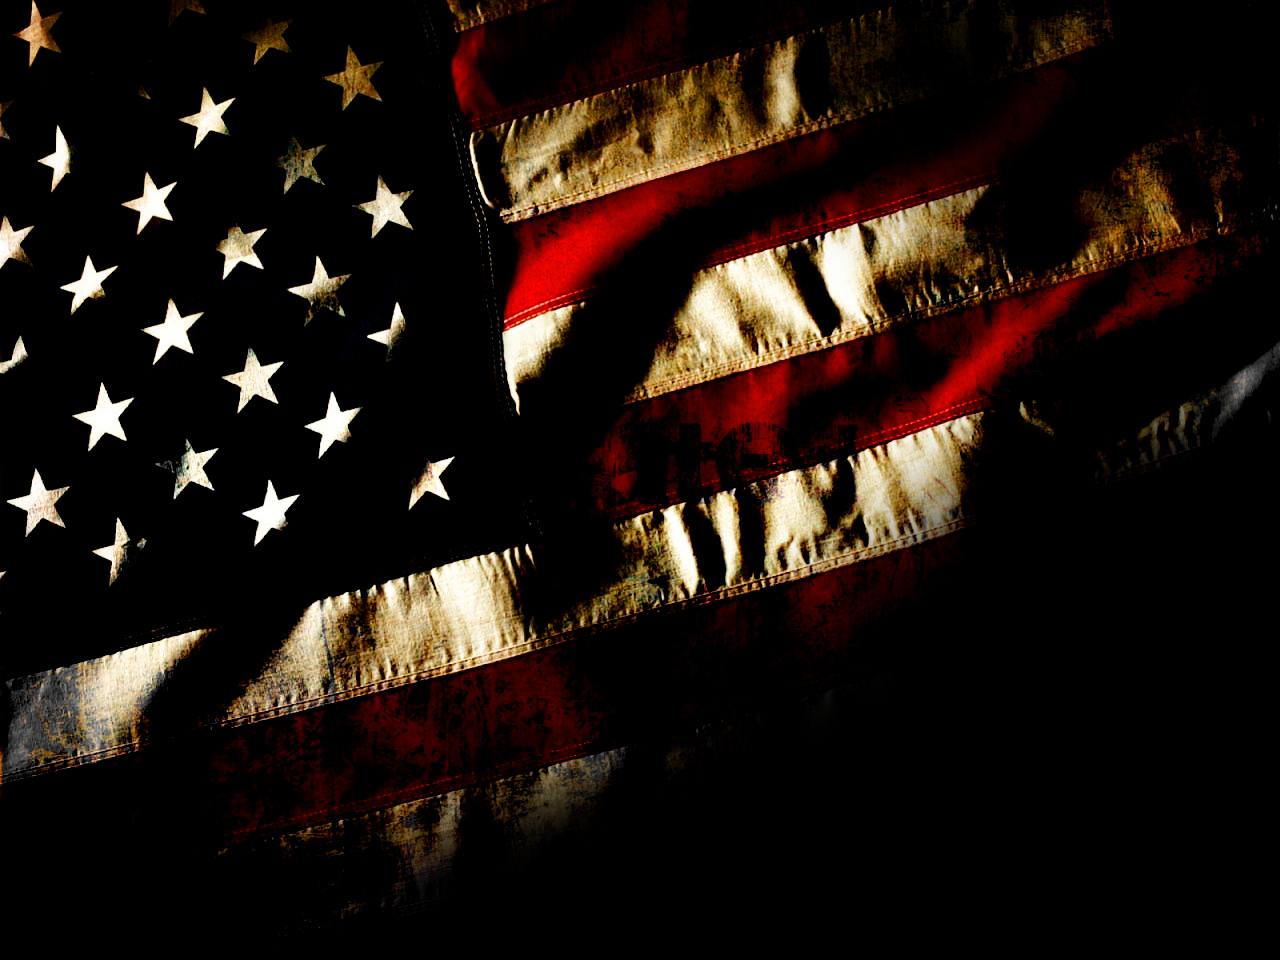 Free Download American Flag Image Hd Wallpaper 3605 Wallpaper